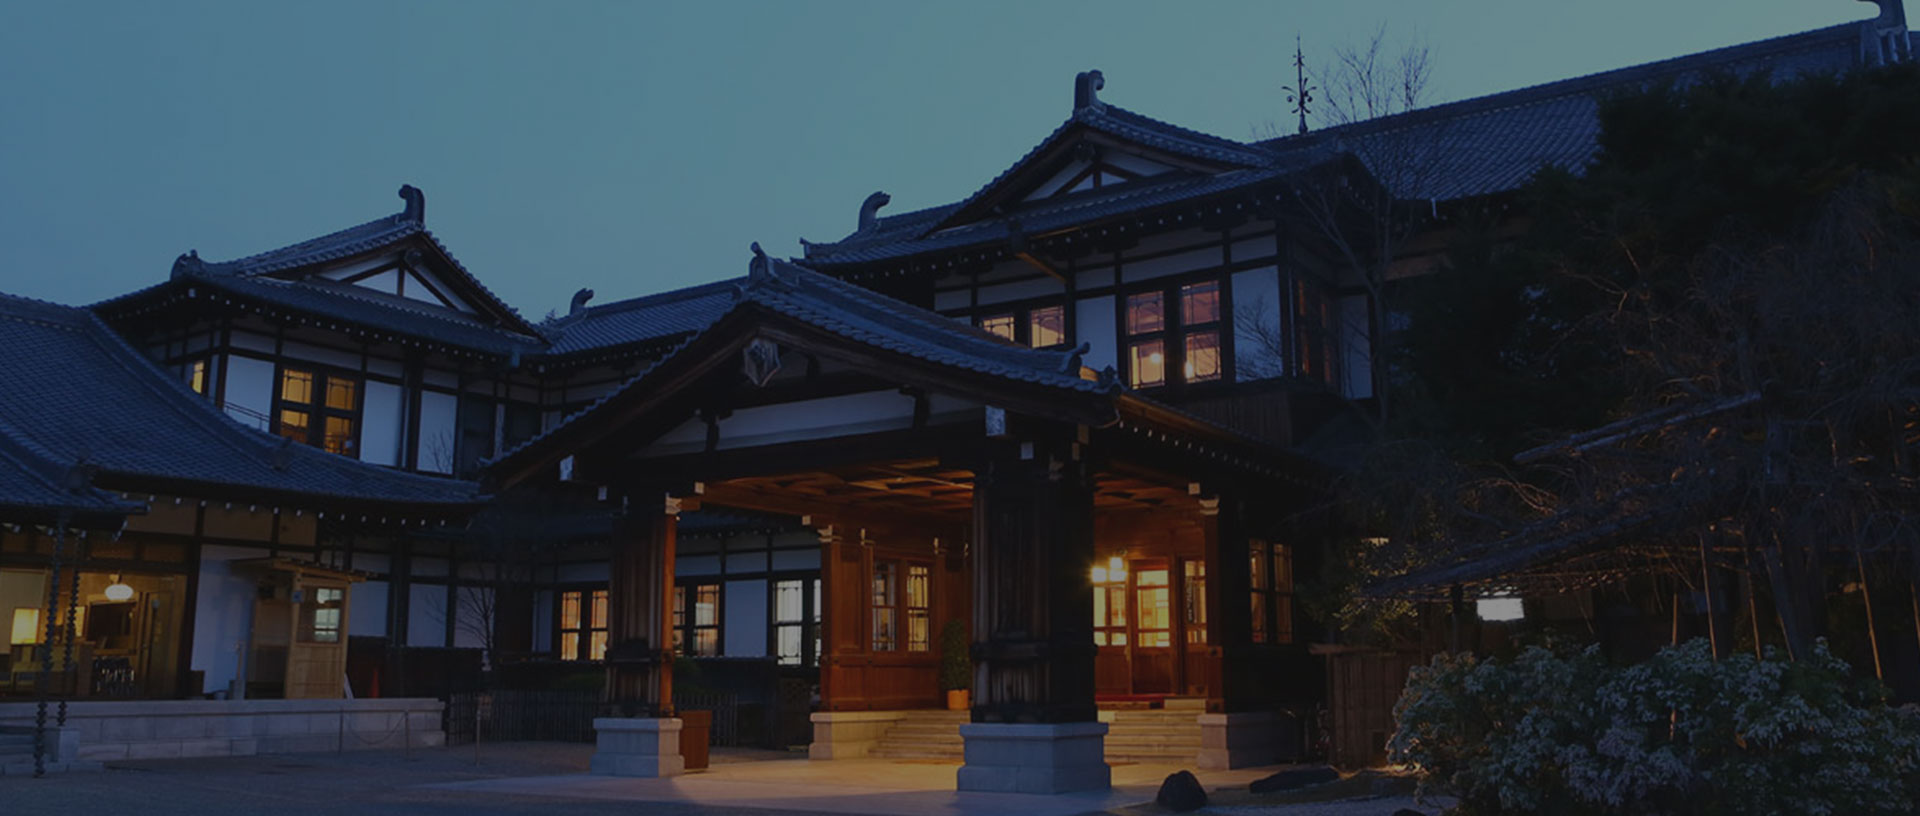 Image：Nara Hotel appearance